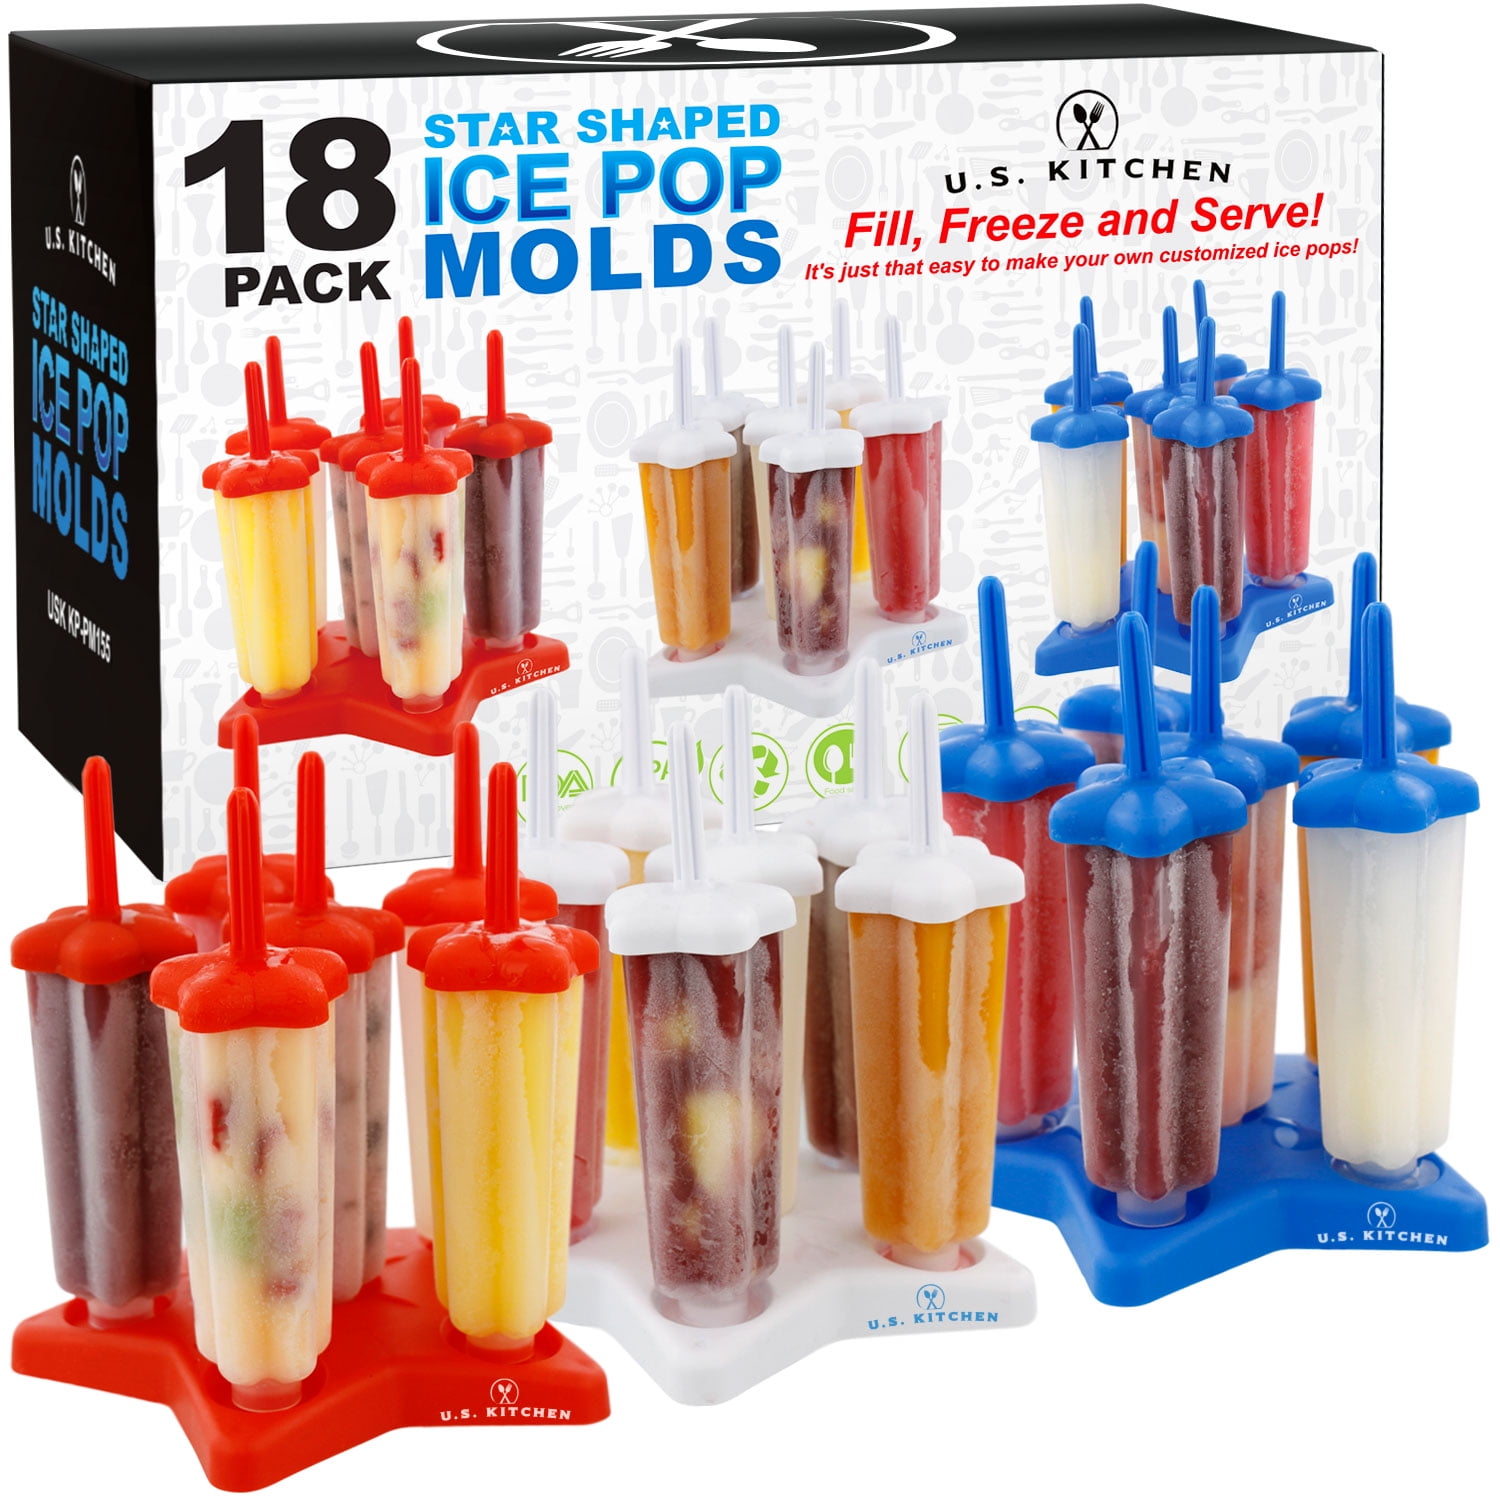 Classic Ice Pop Molds on Food52